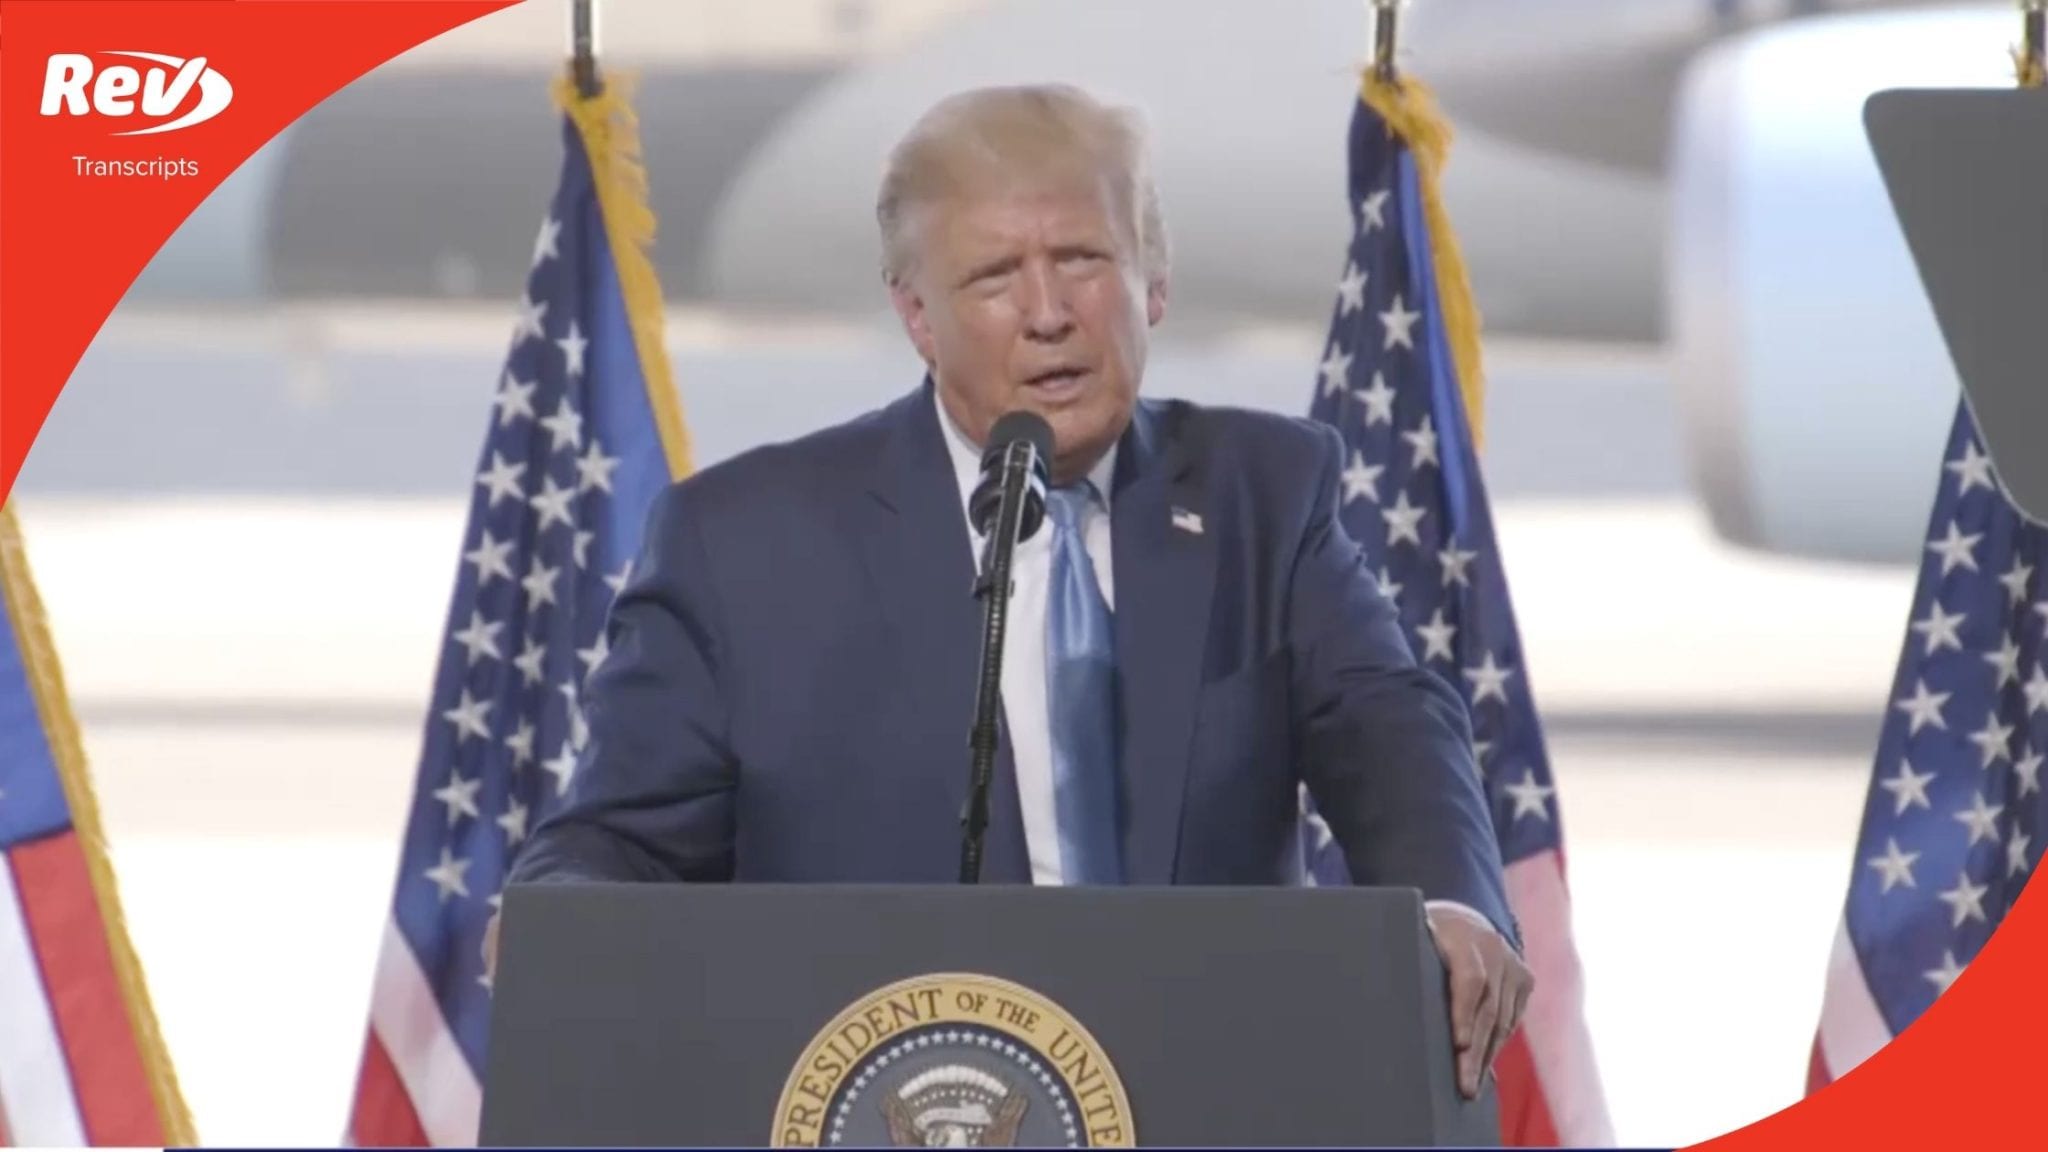 Donald Trump Immigration Speech Transcript August 18: Yuma, Arizona